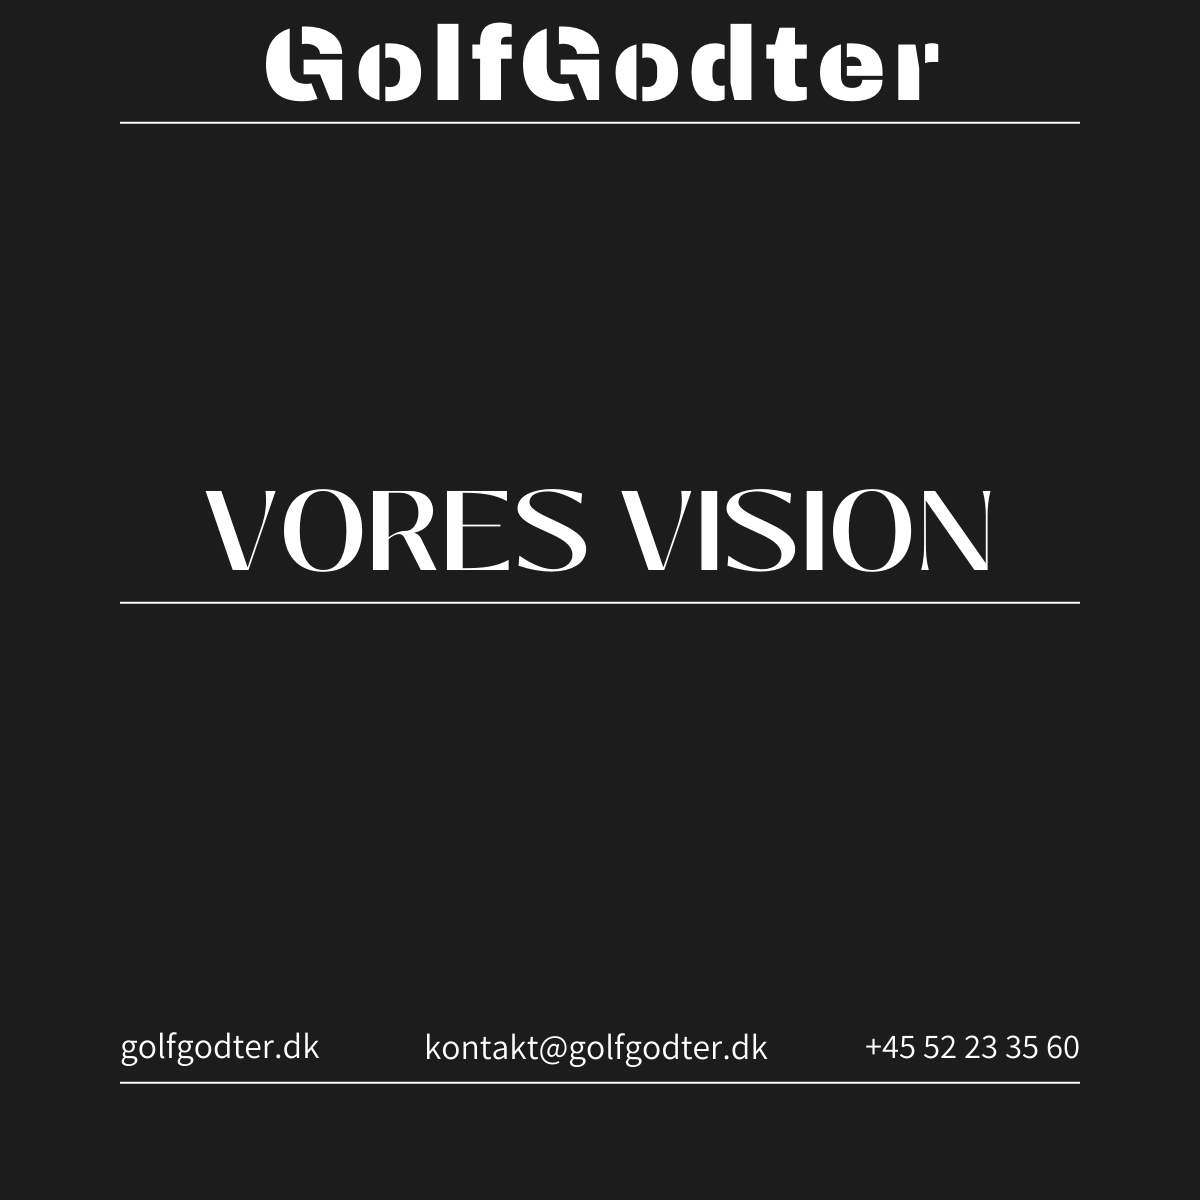 GolfGodter's vision